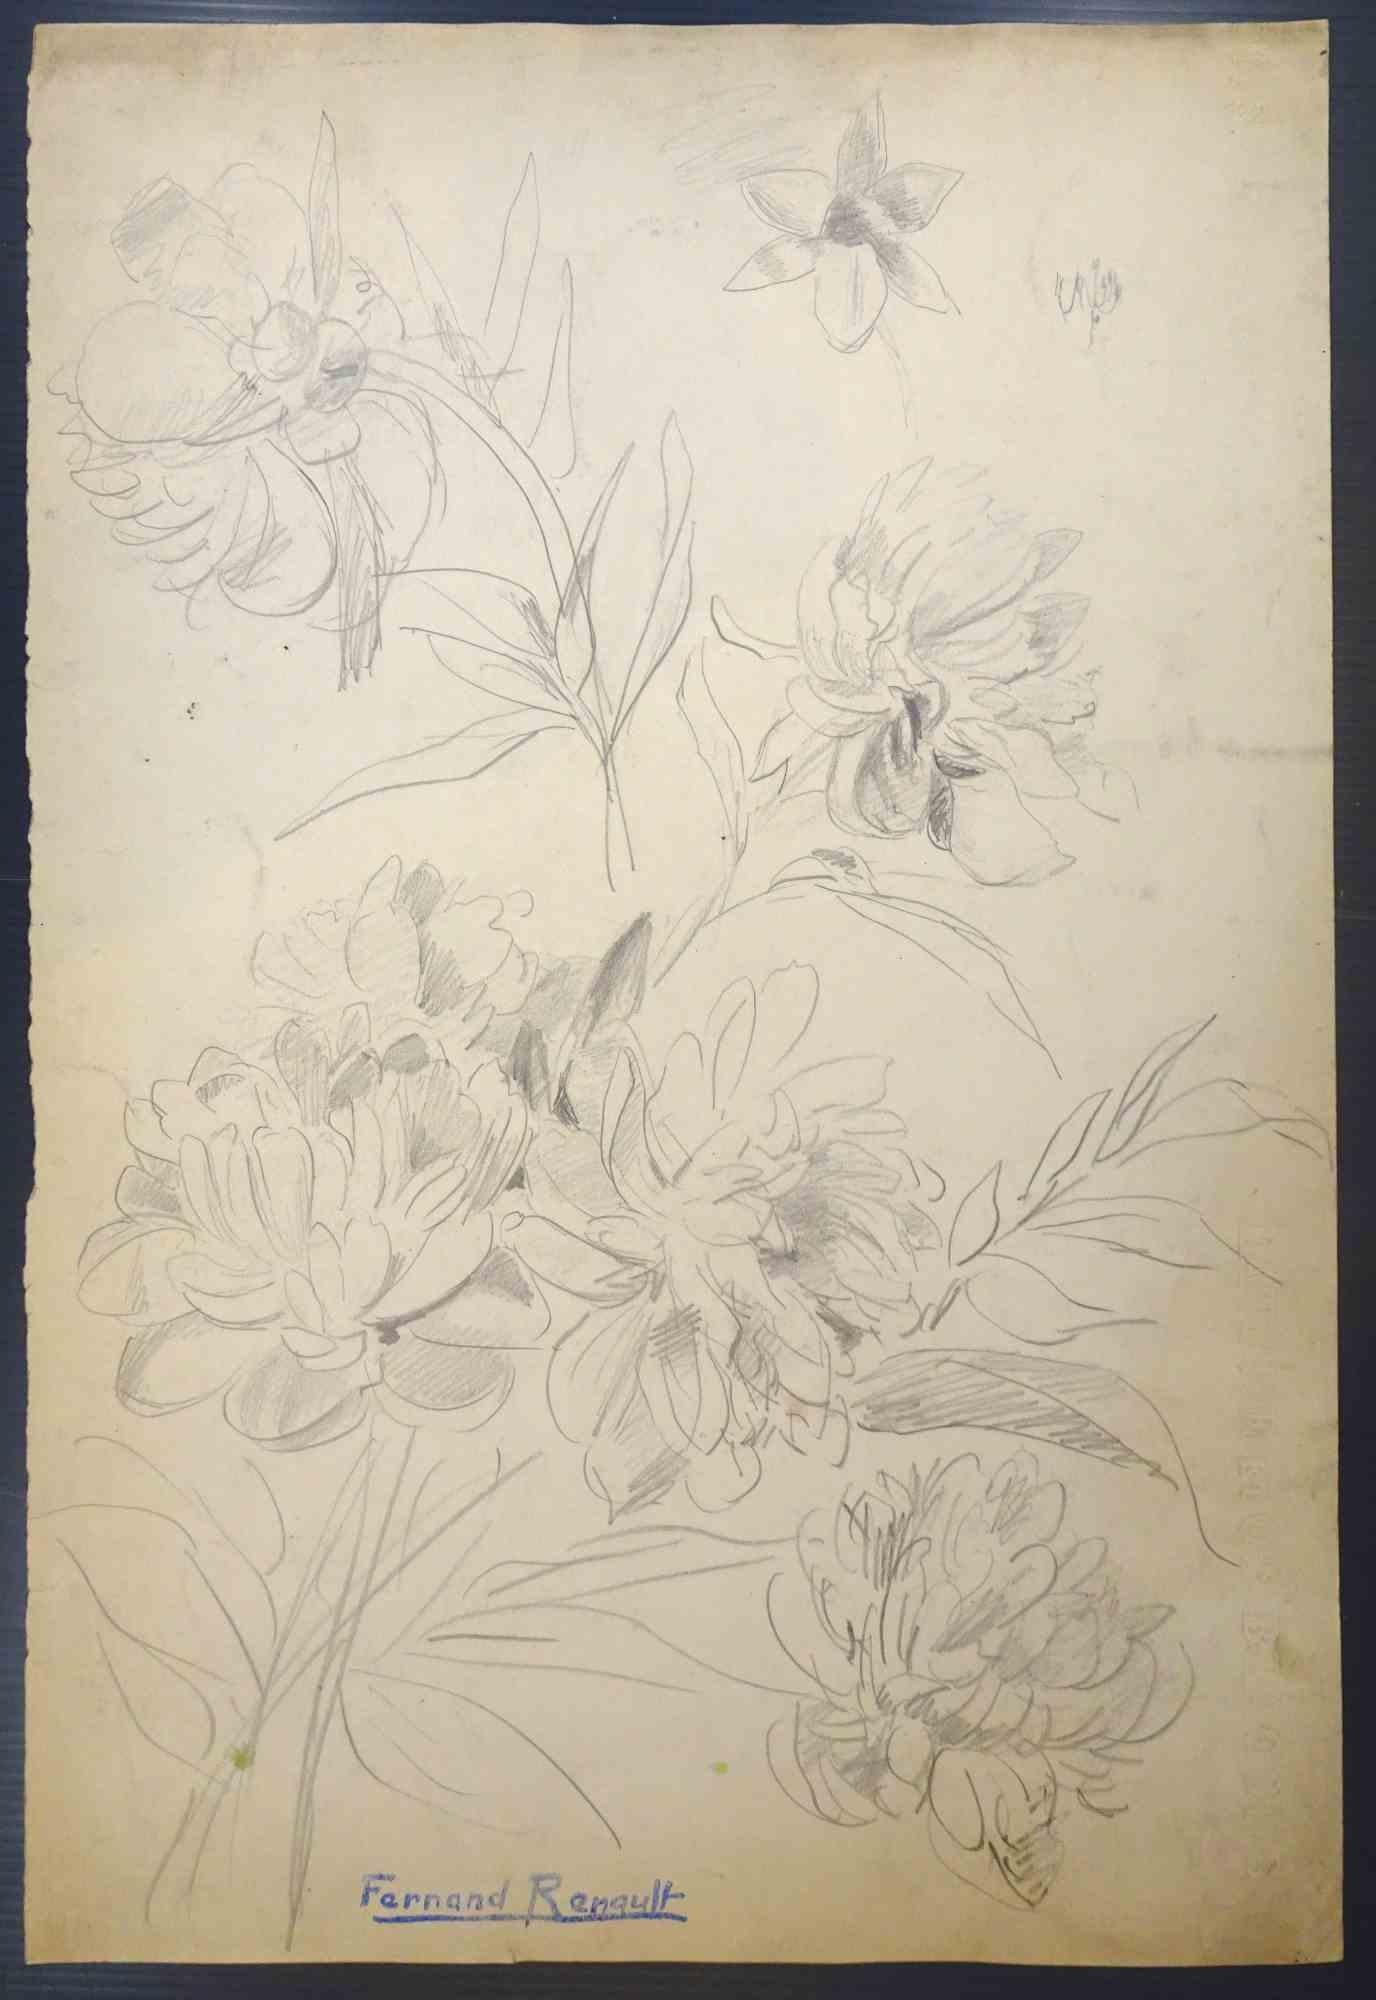 Flowers - Drawing by Albert Fernand-Renault - 1950s